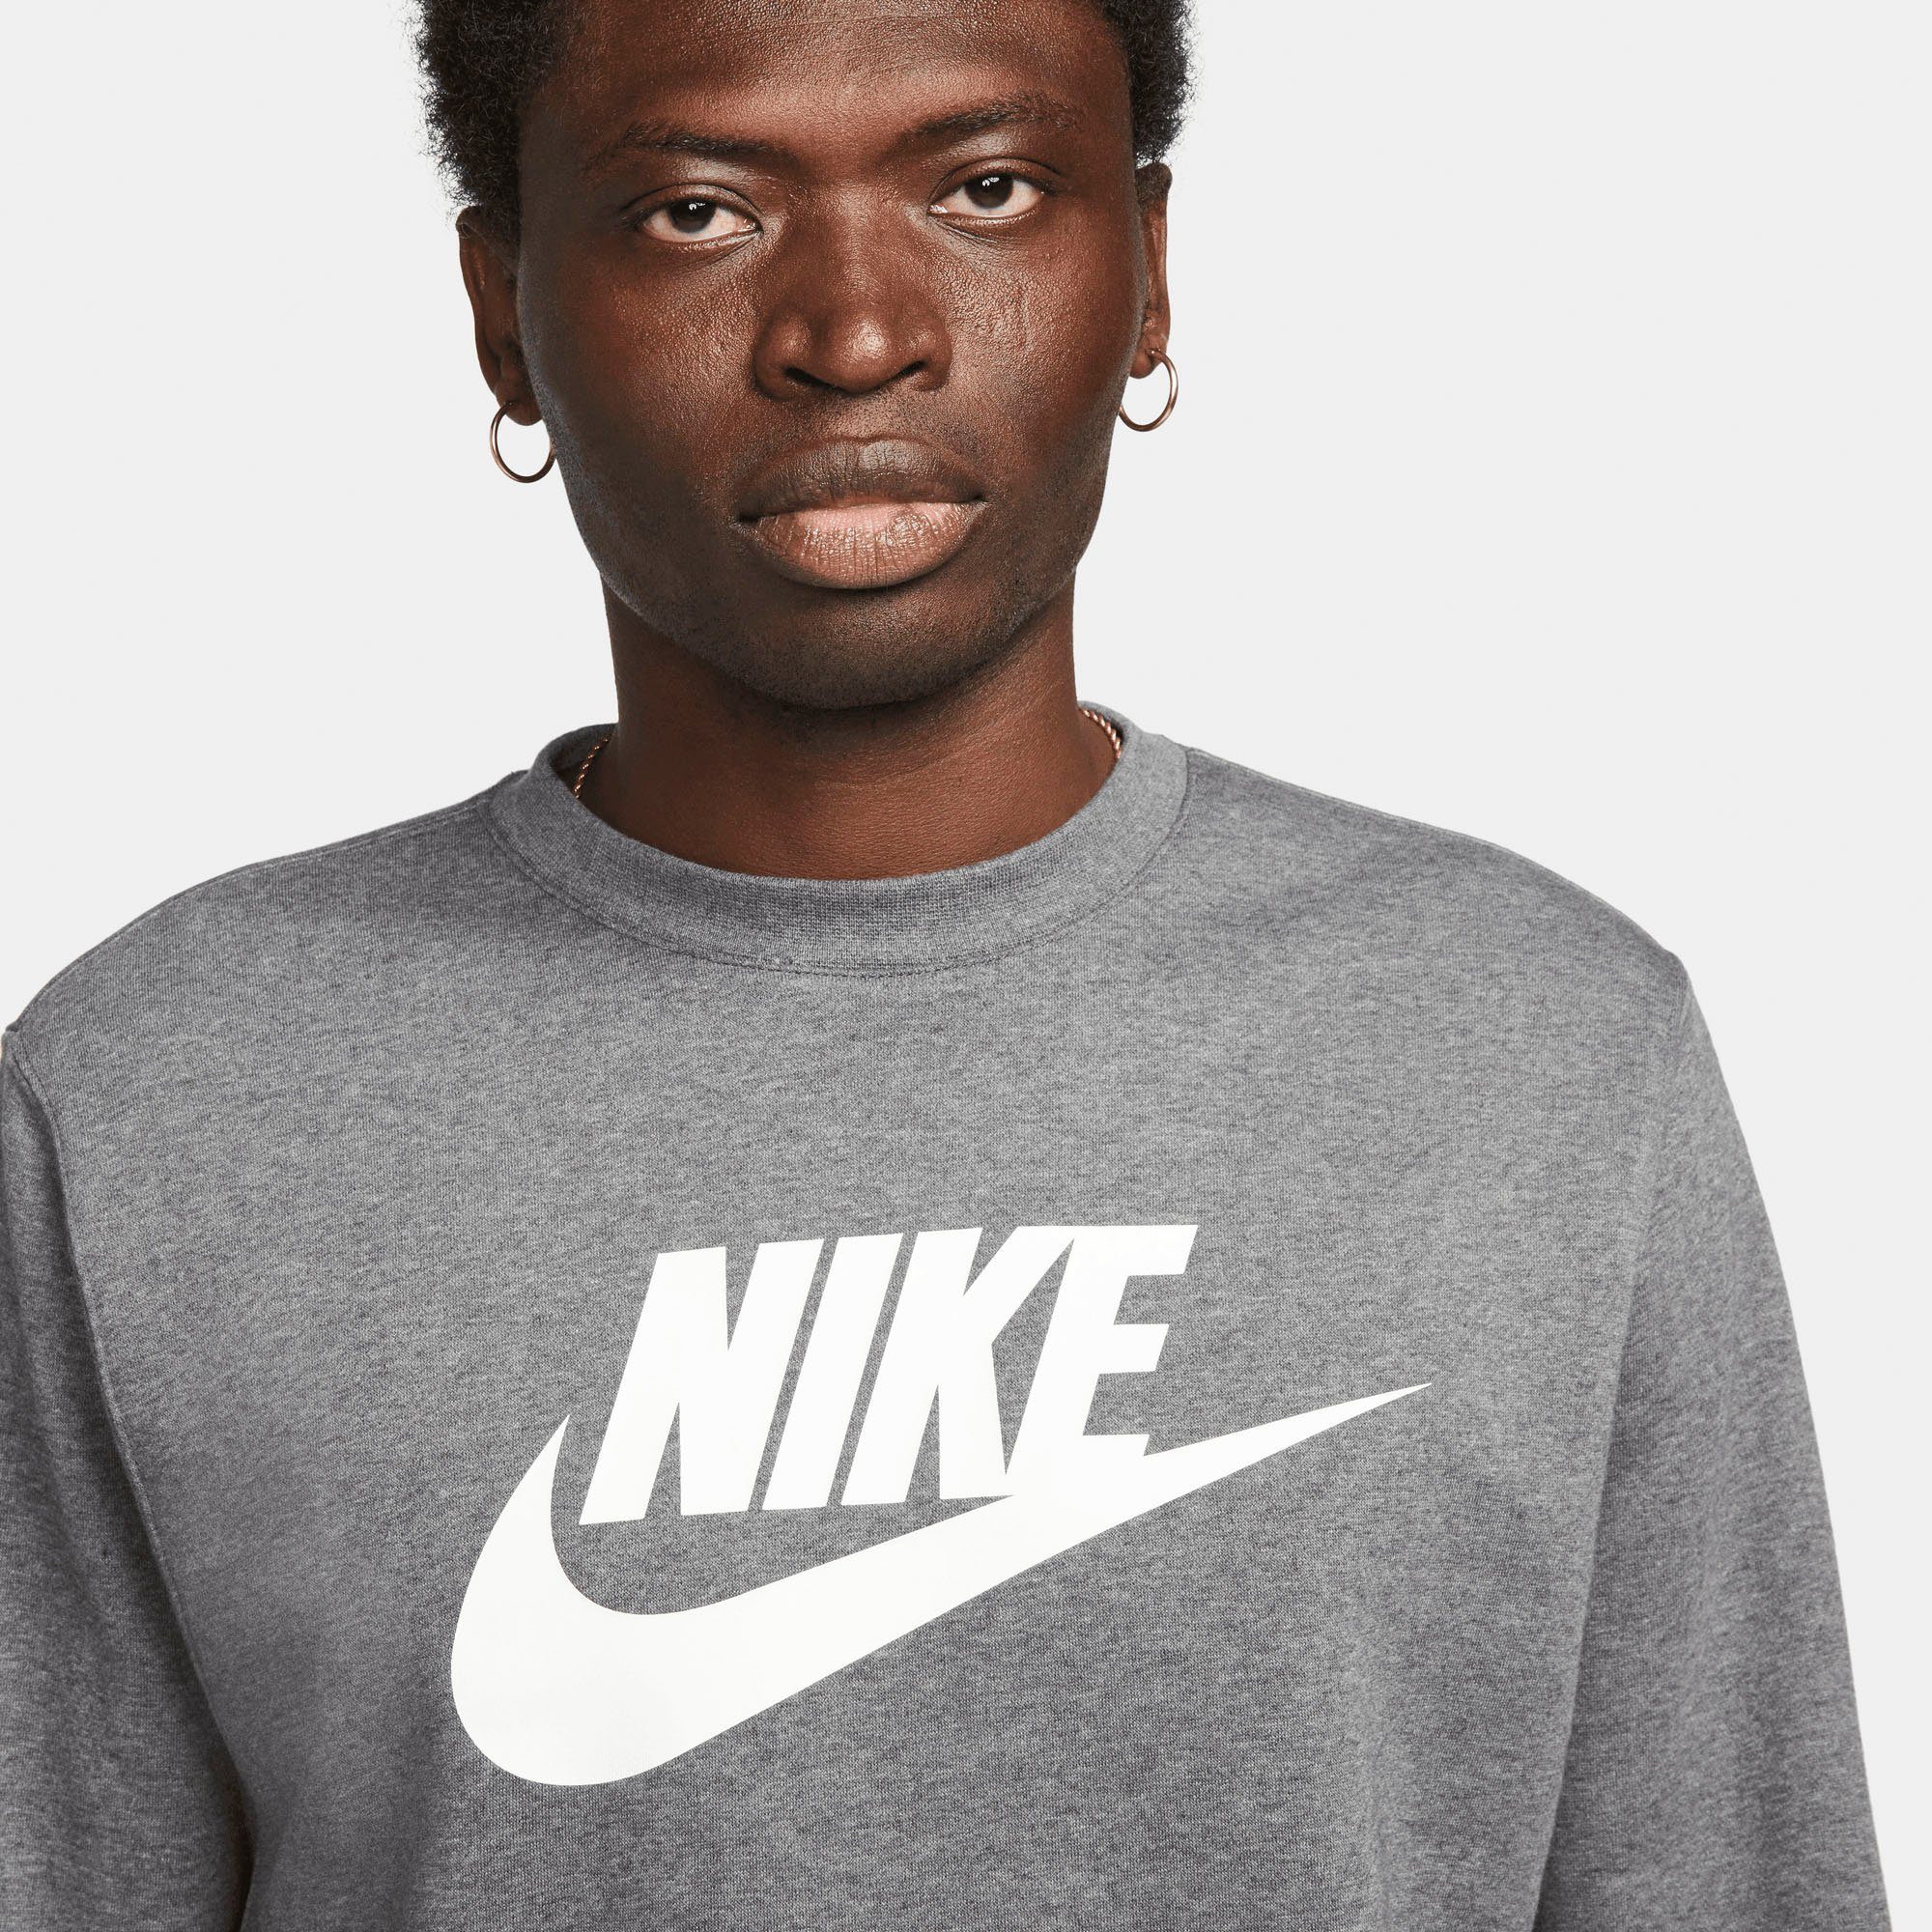 Nike Sportswear Sweatshirt Club Fleece Graphic Crew HEATHR CHARCOAL Men's